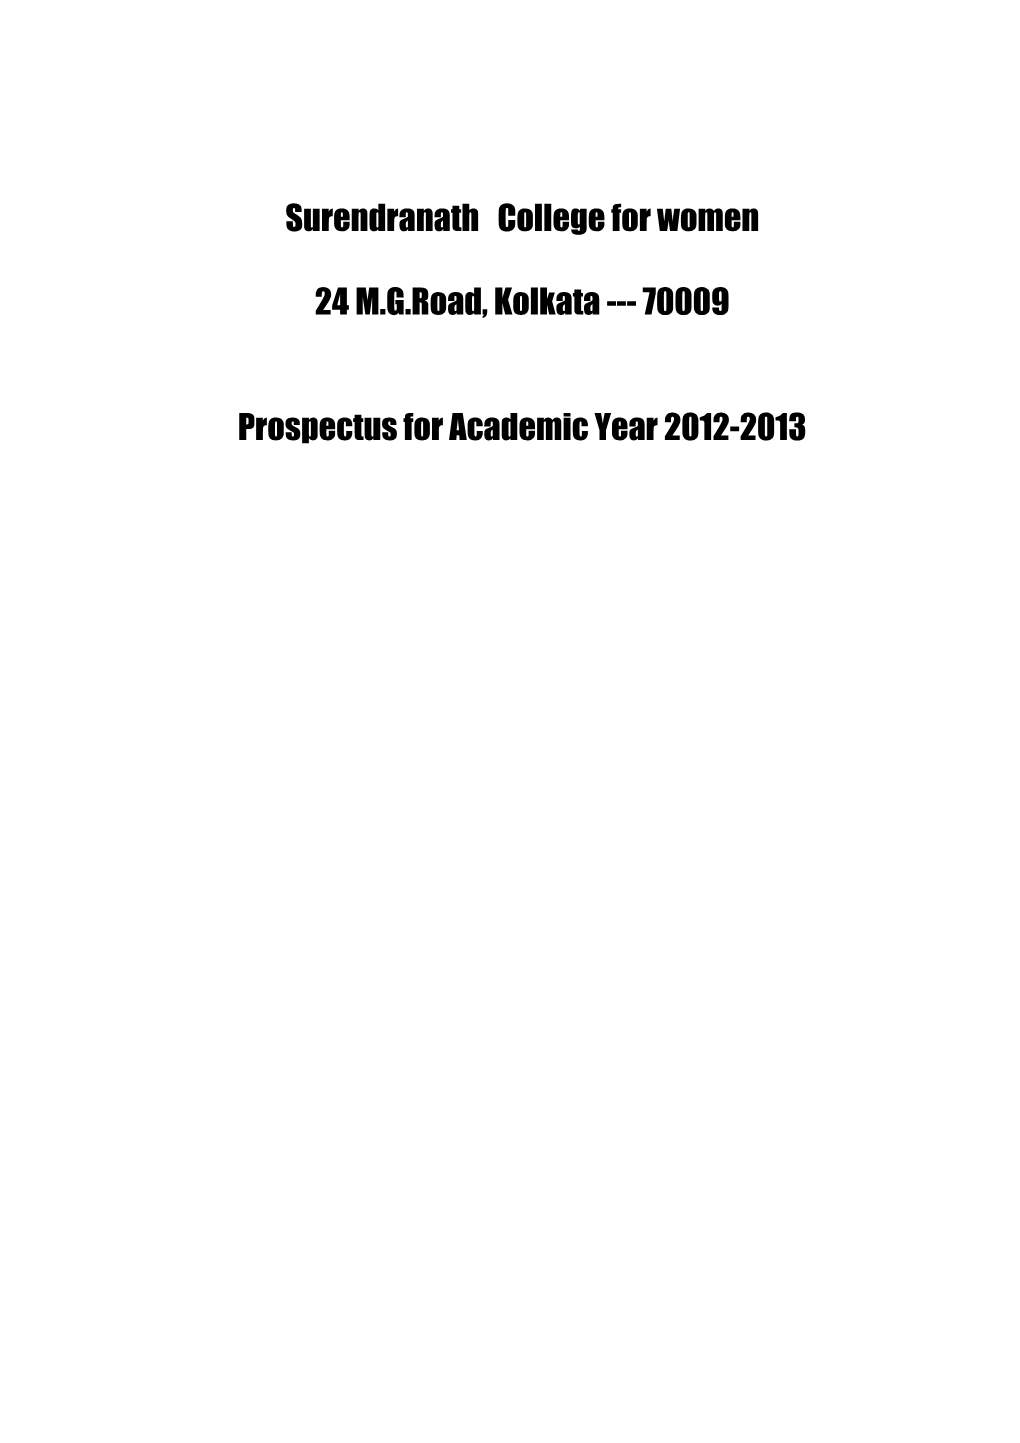 70009 Prospectus for Academic Year 2012-2013